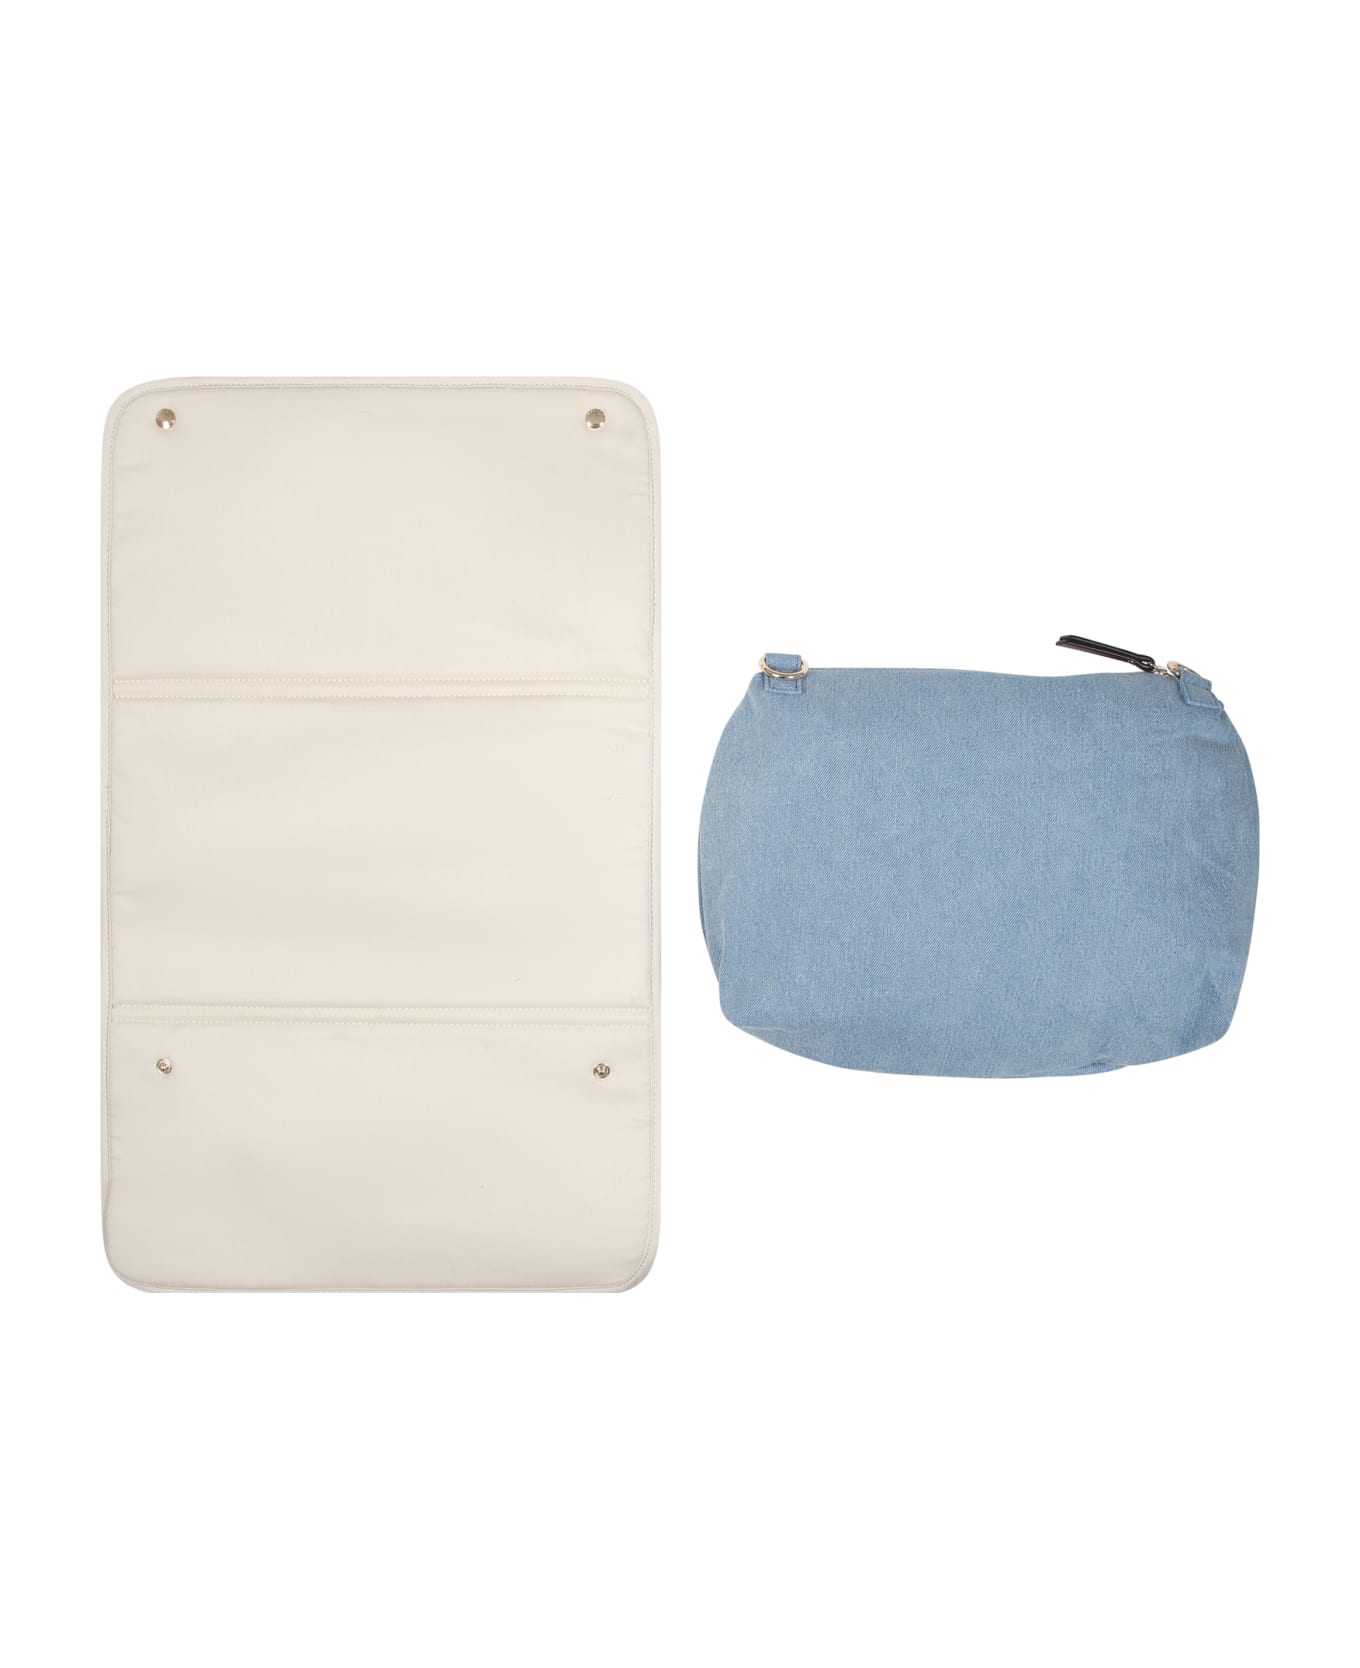 Chloé Denim Changing Bag For Baby Girl - Azzurro